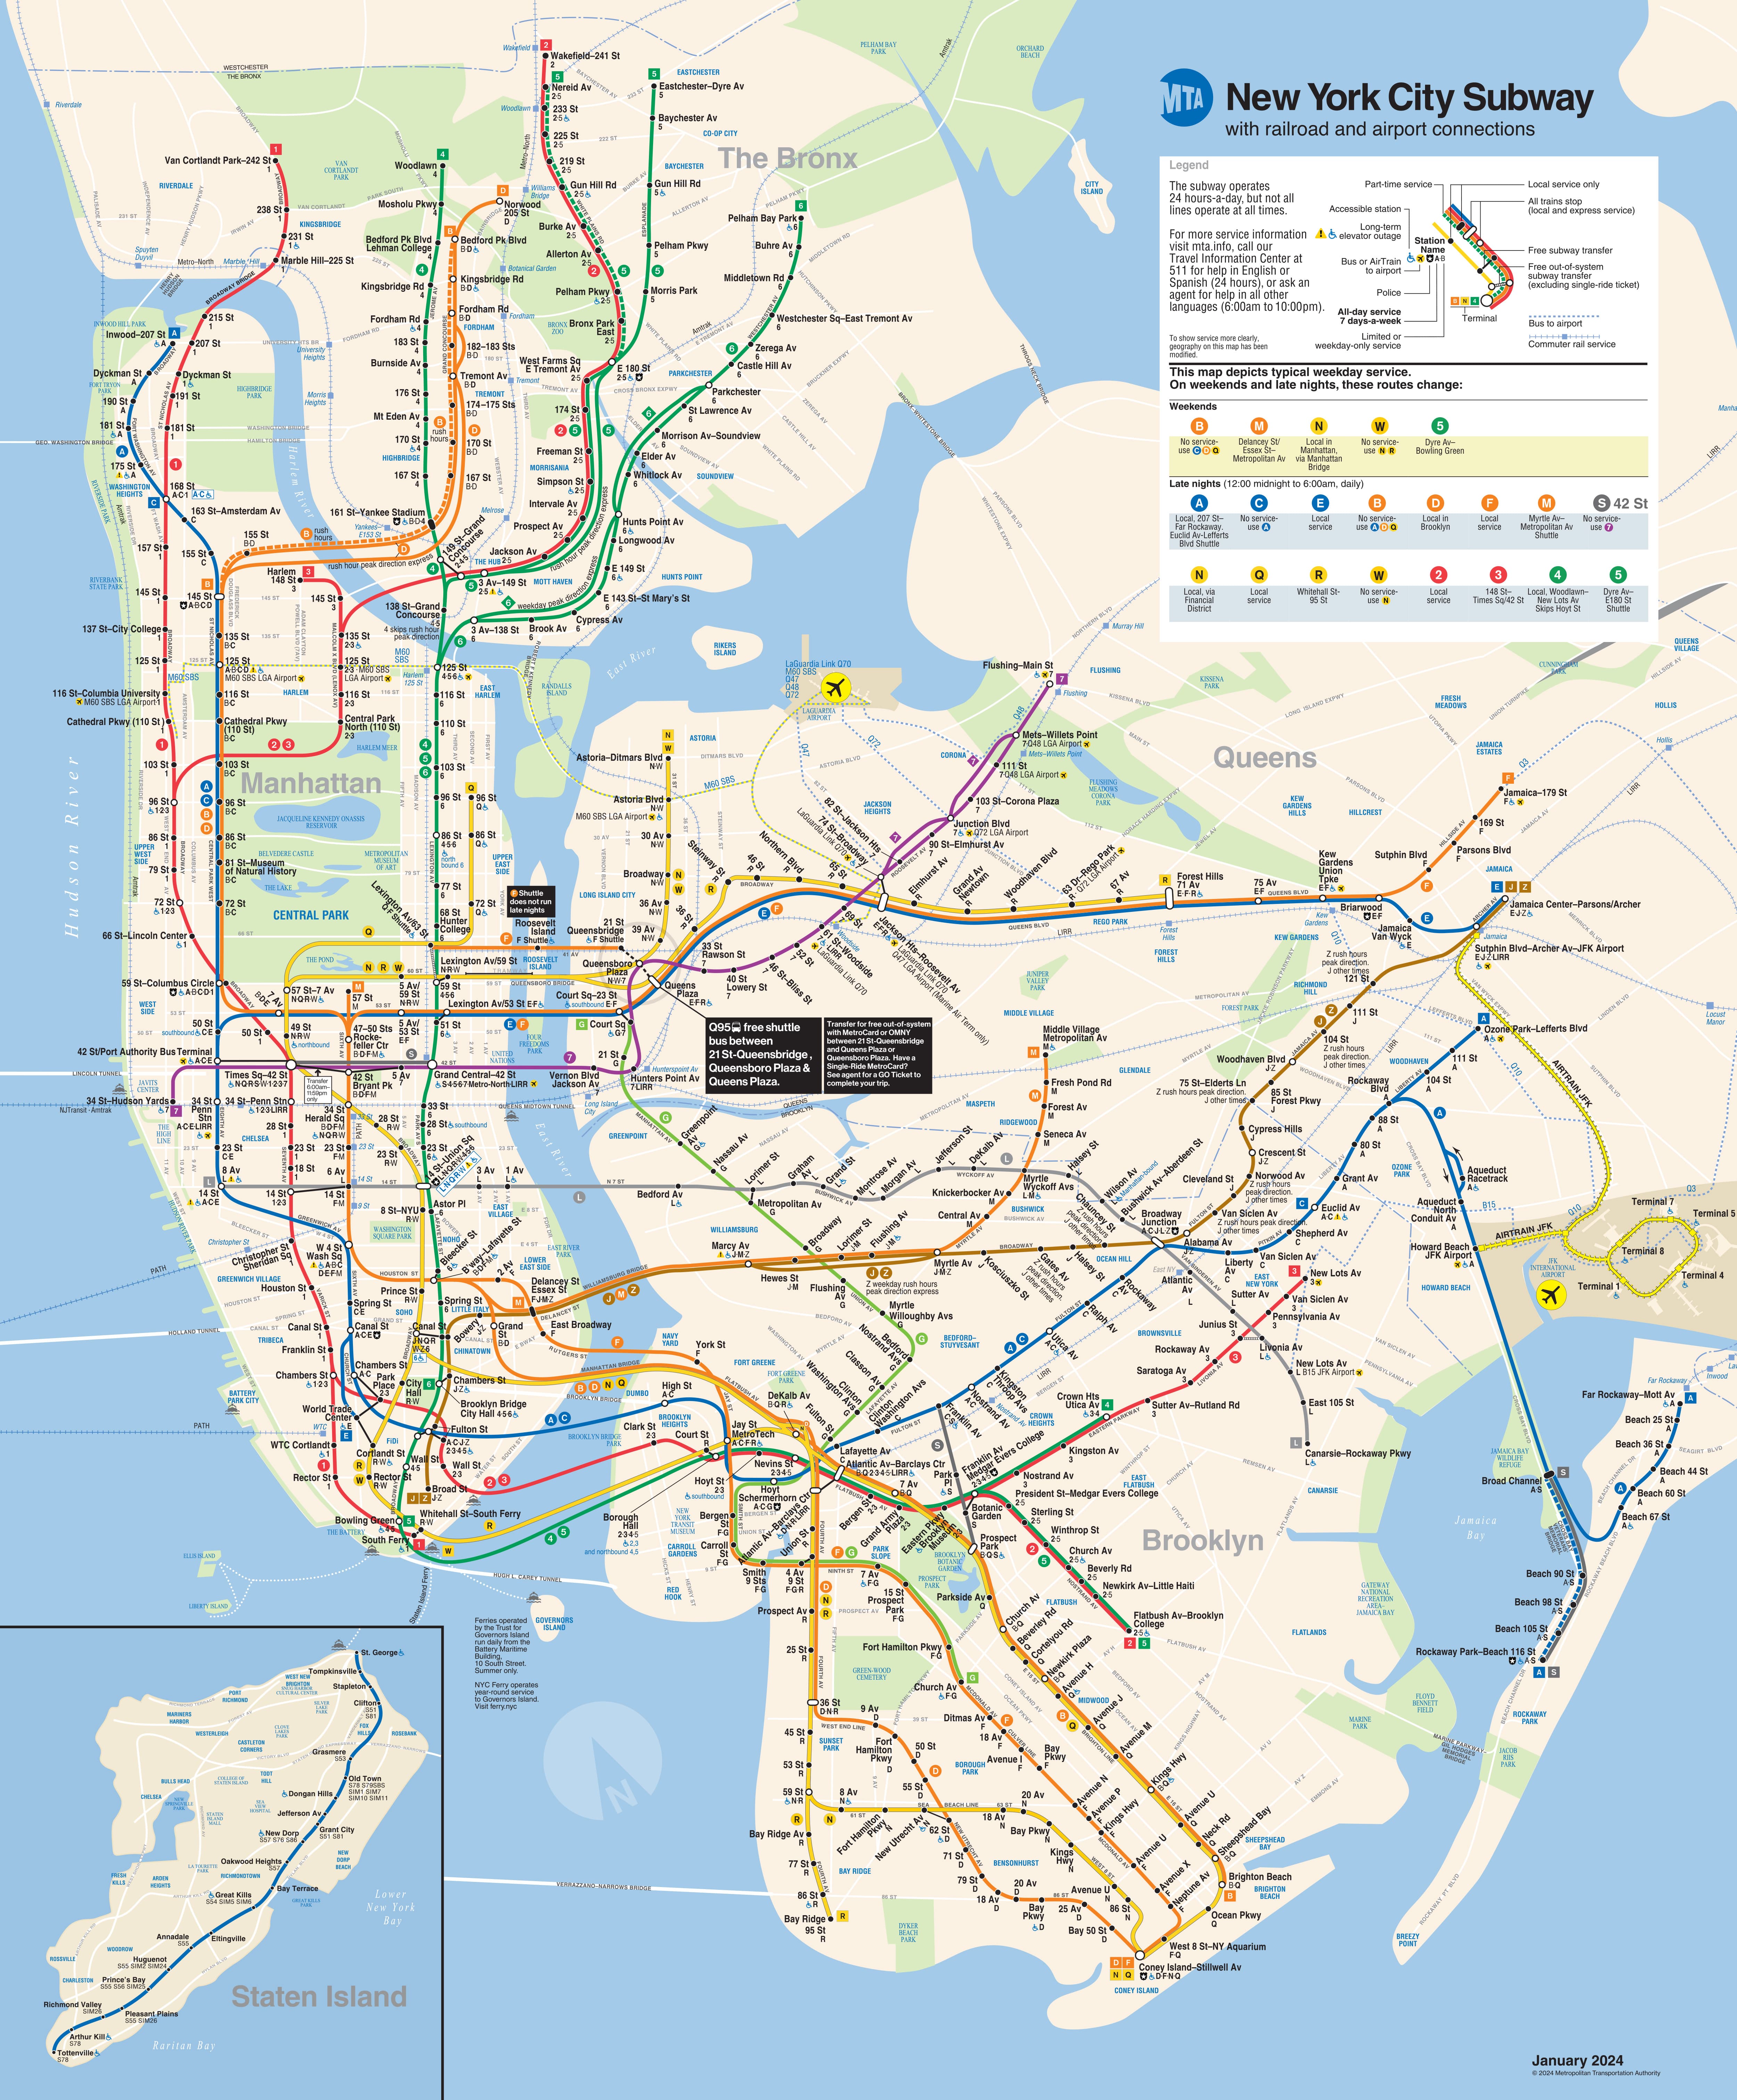 new york penn station map